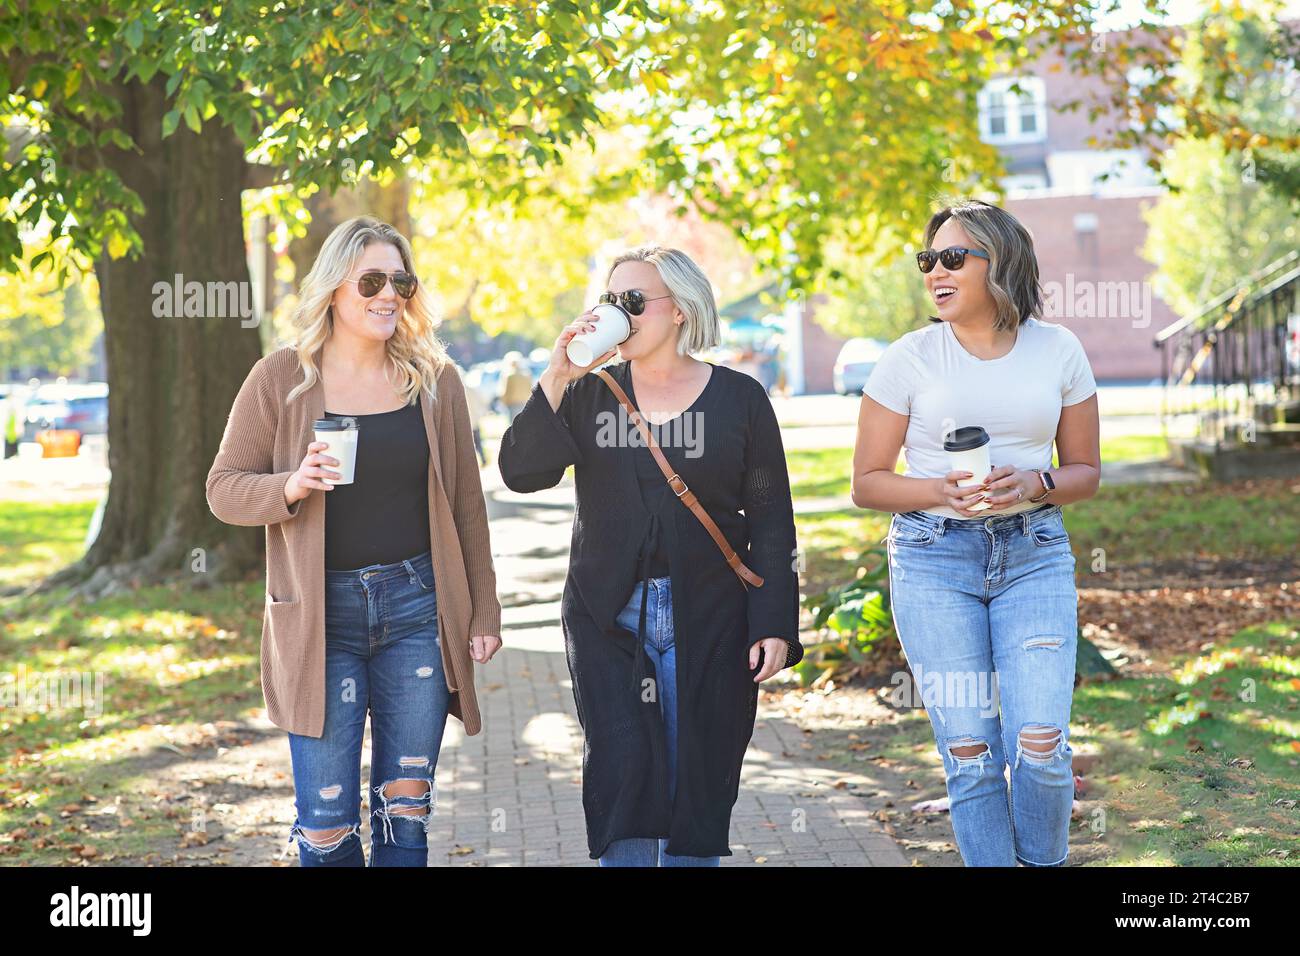 Three women walking down Main Street drinking coffee; friendship Stock Photo